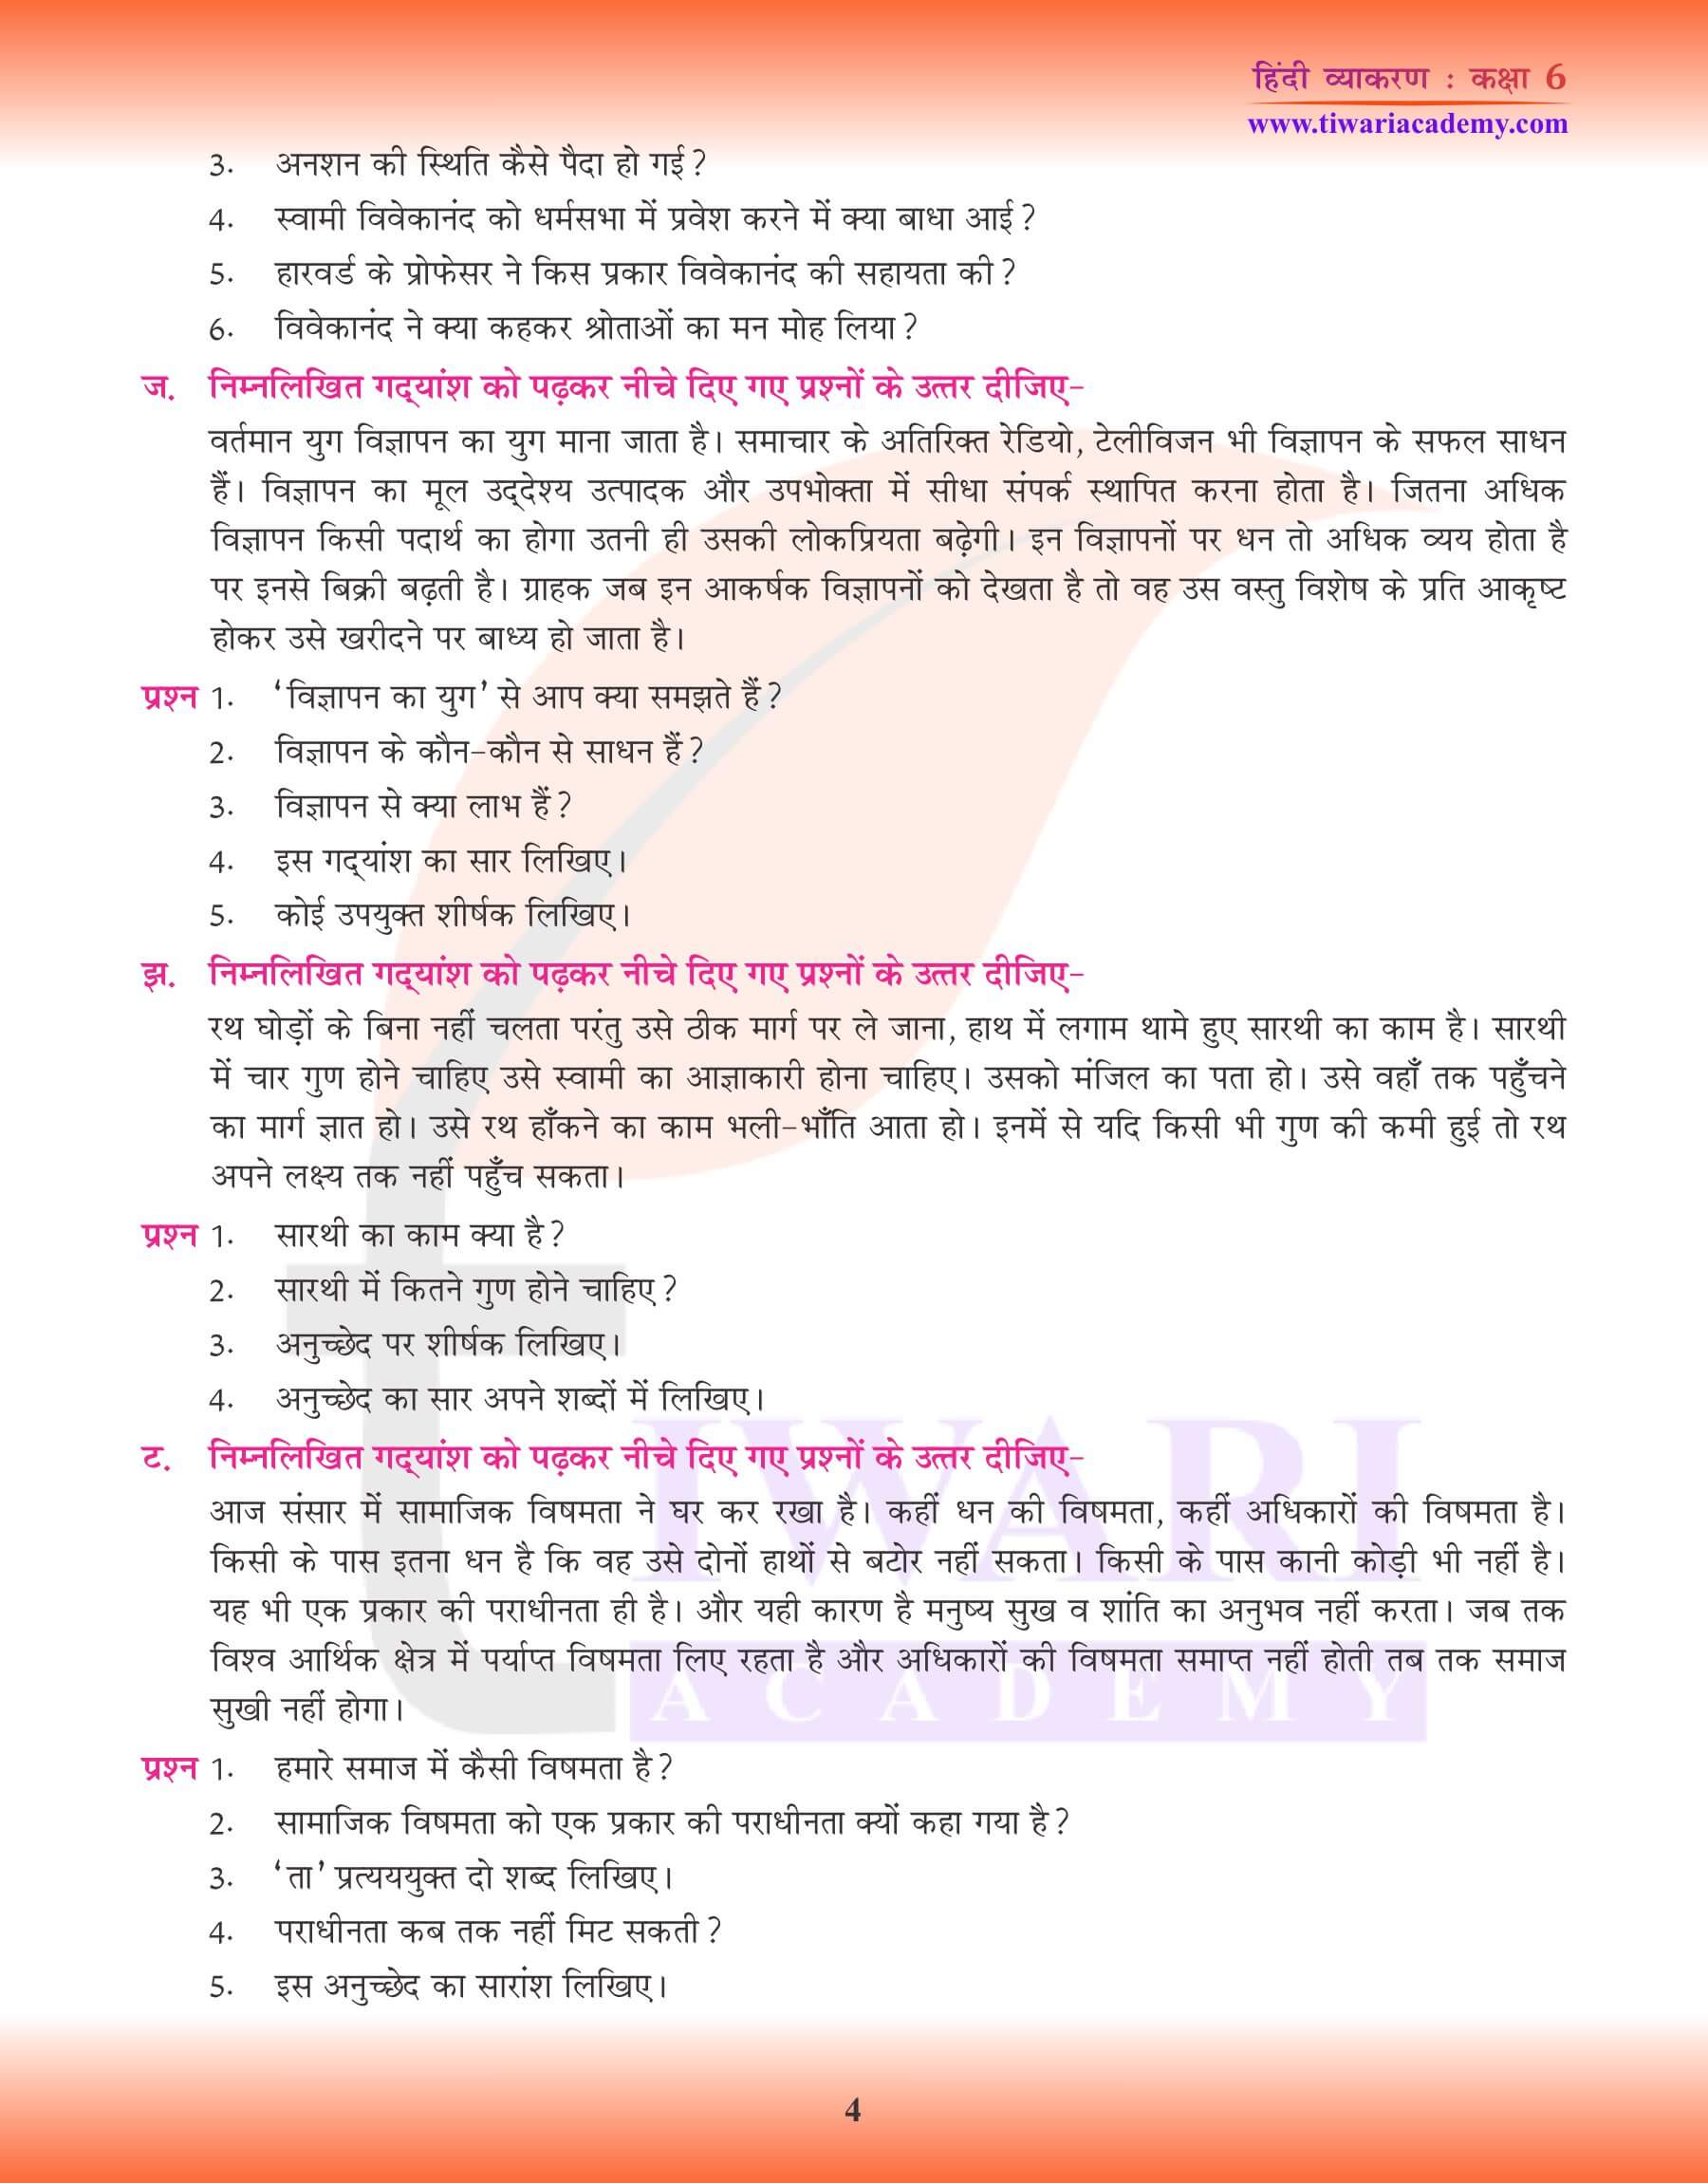 कक्षा 6 हिंदी व्याकरण अपठित गद्यांश प्रश्न उत्तर